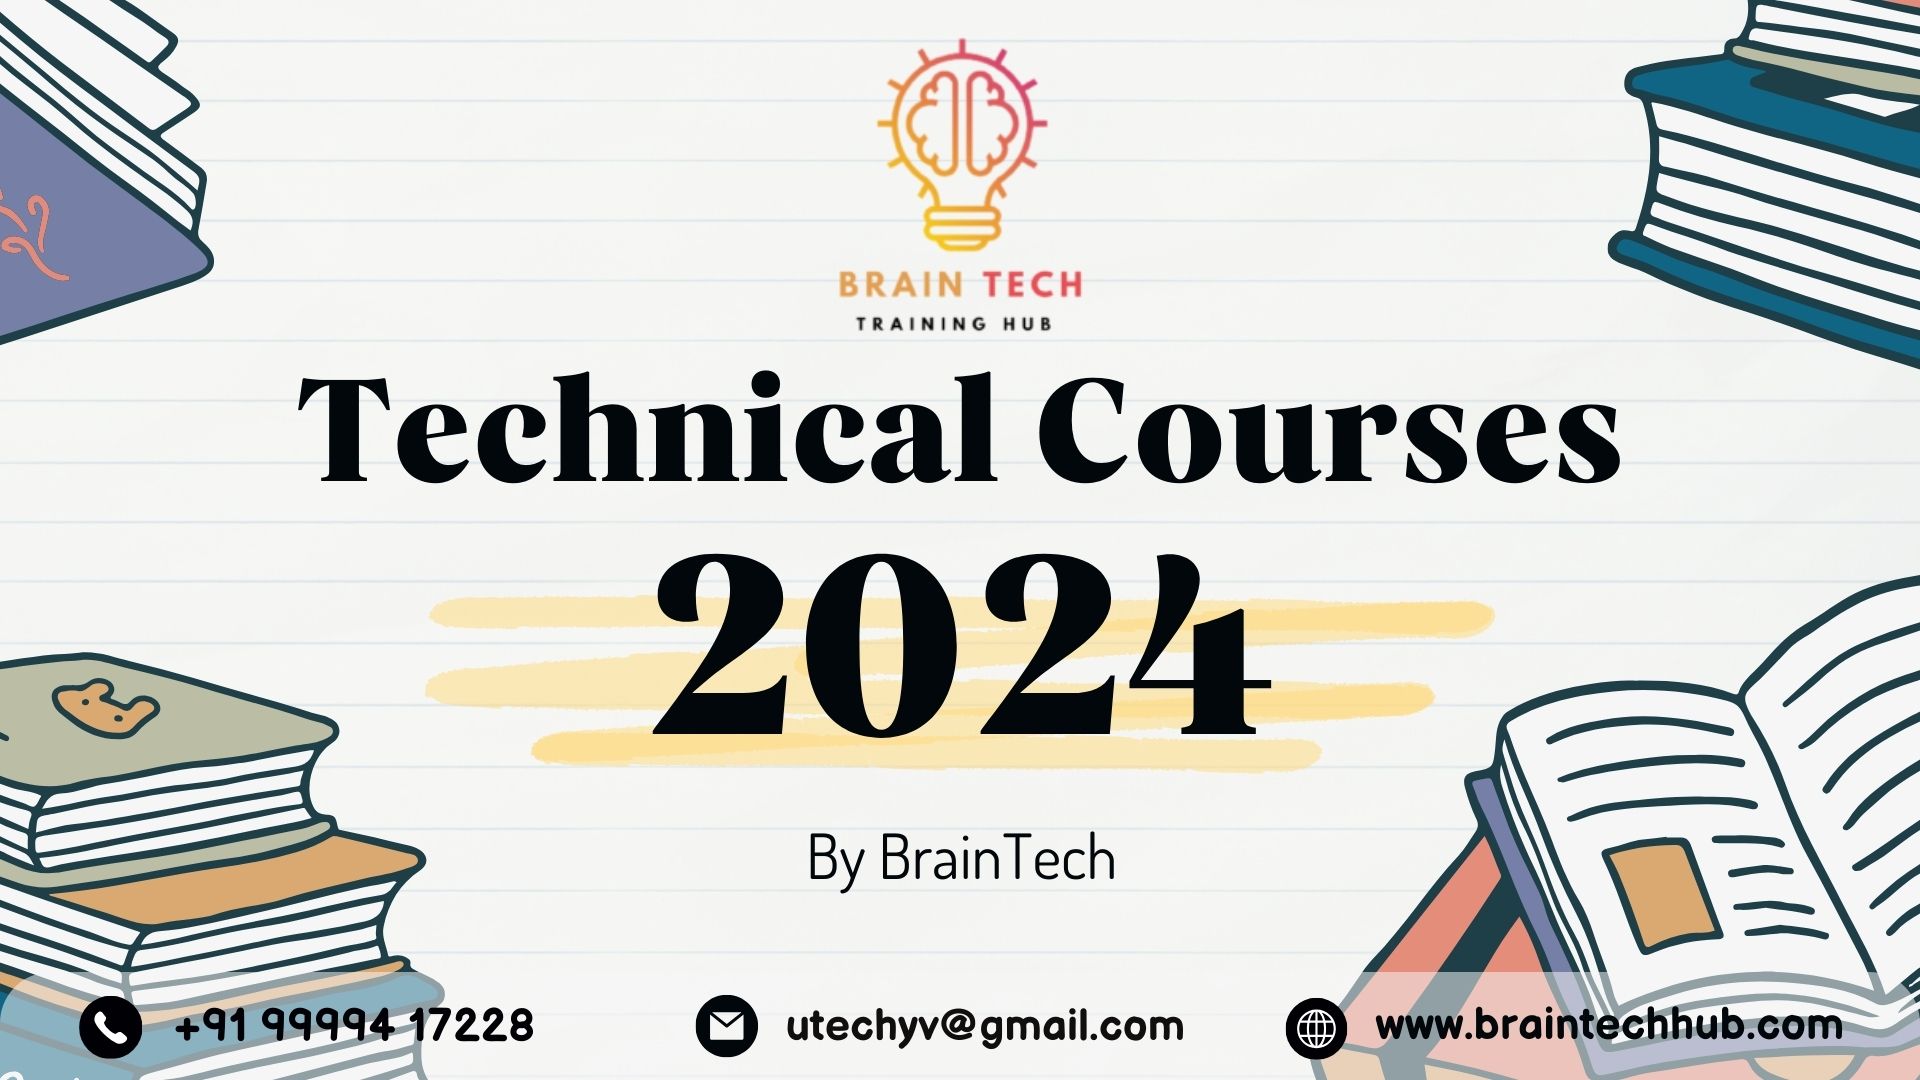 Technical Courses 2024 Want Job? Do These BrainTech